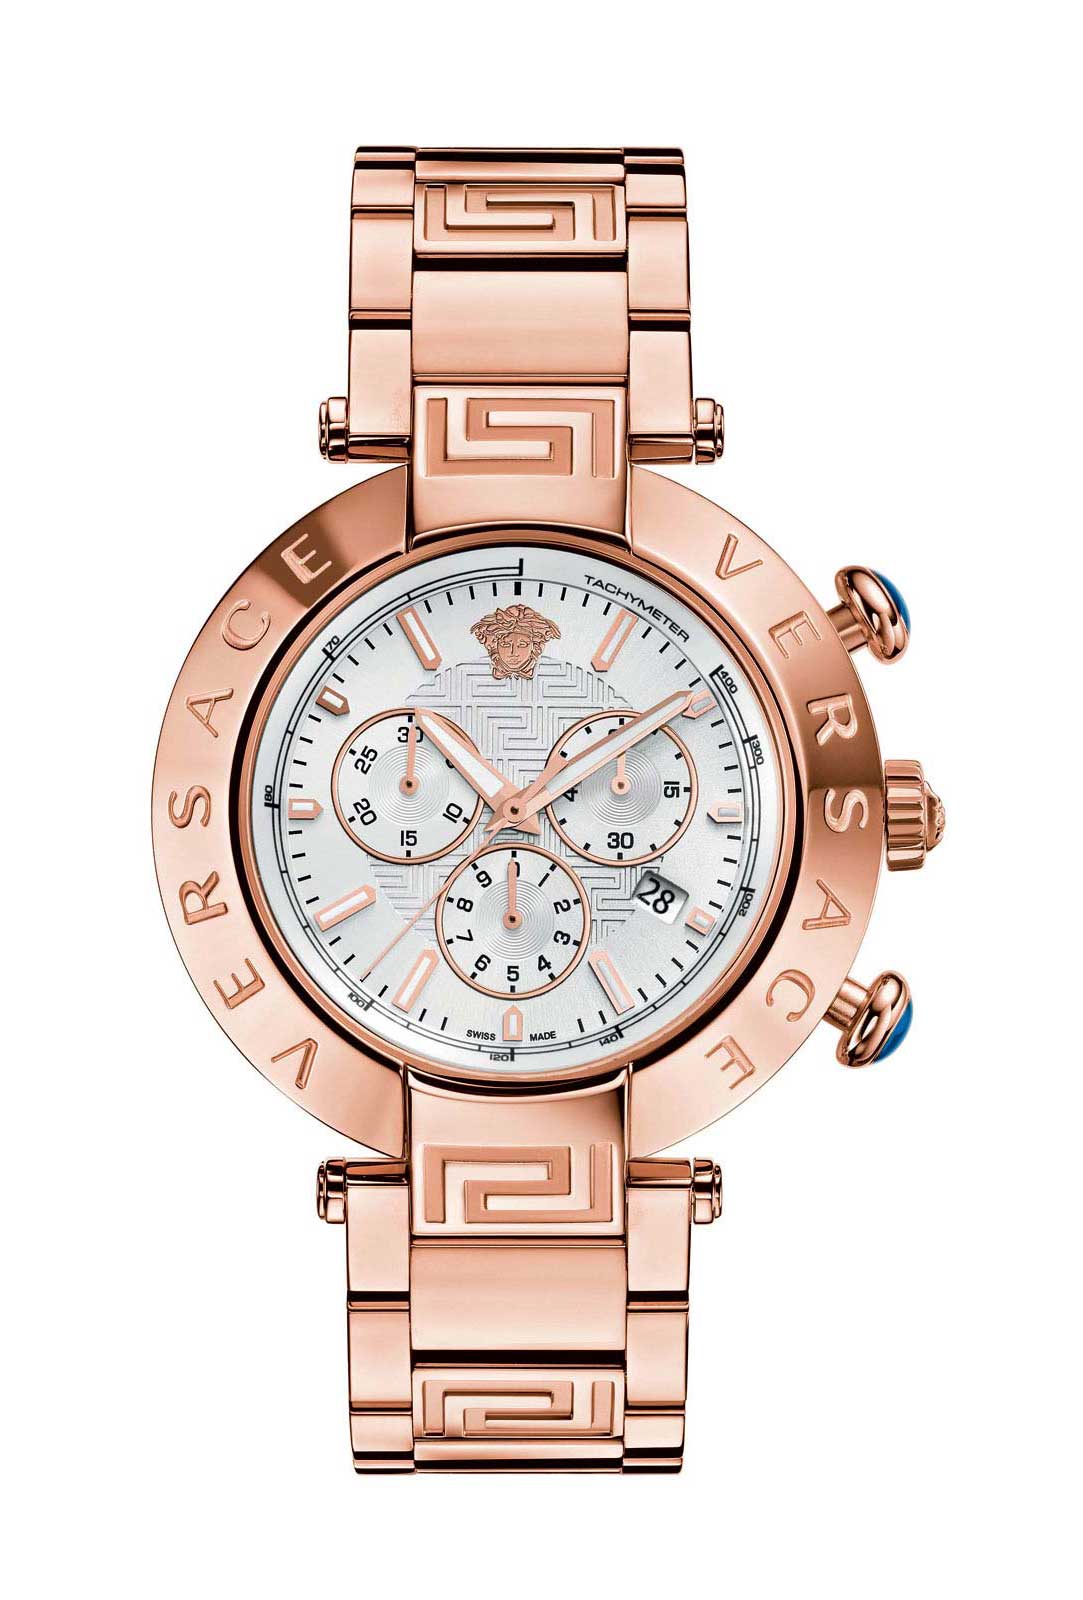 Versace QUARTZ CHRONO watch 5040D ROSE GOLD